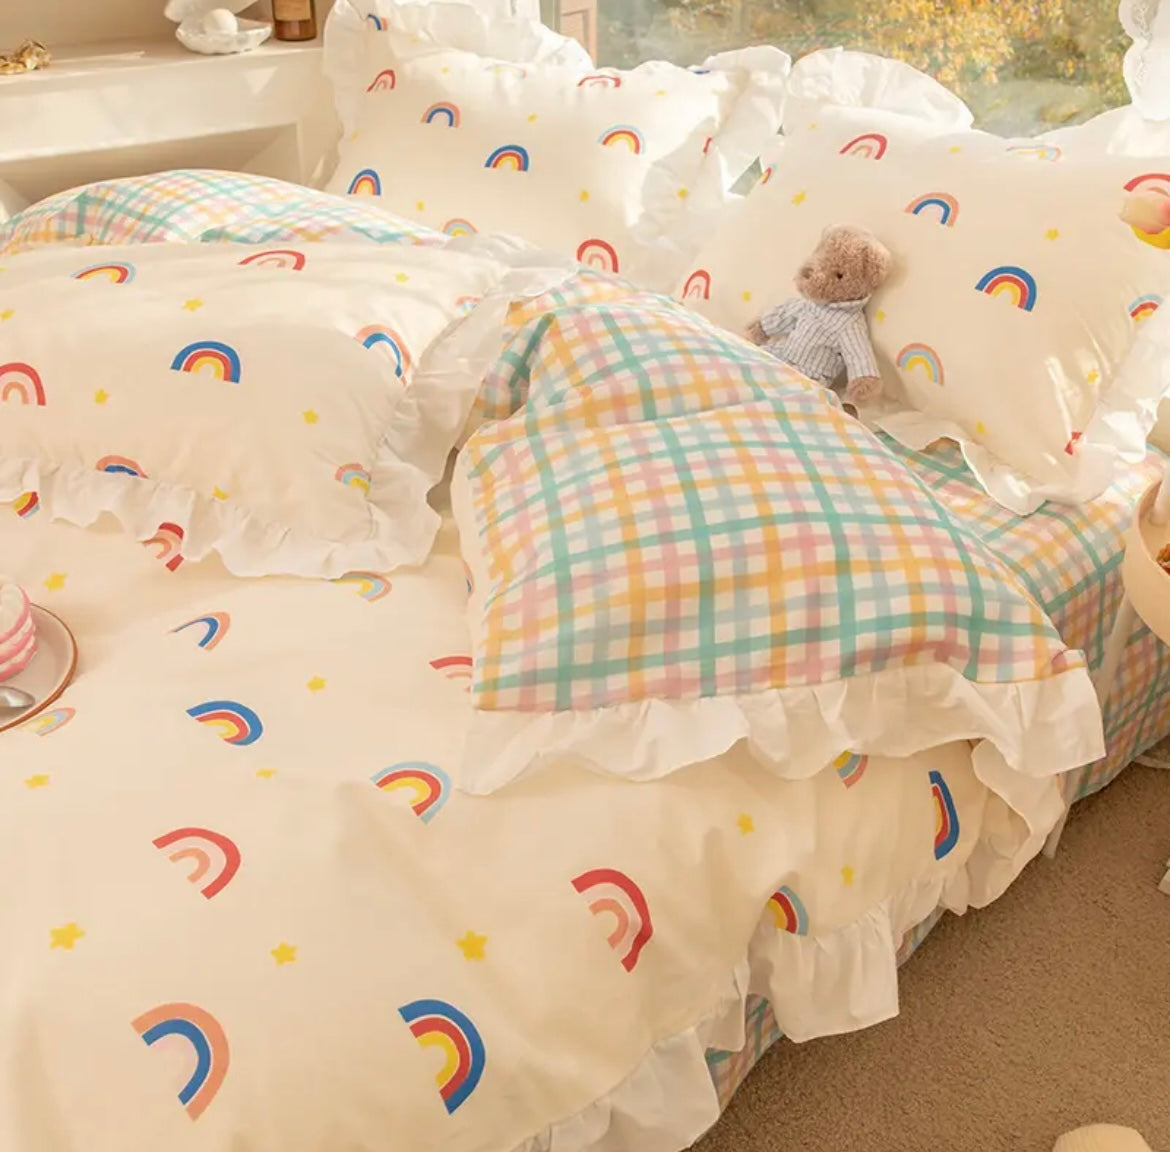 Rainbow Bedding Set